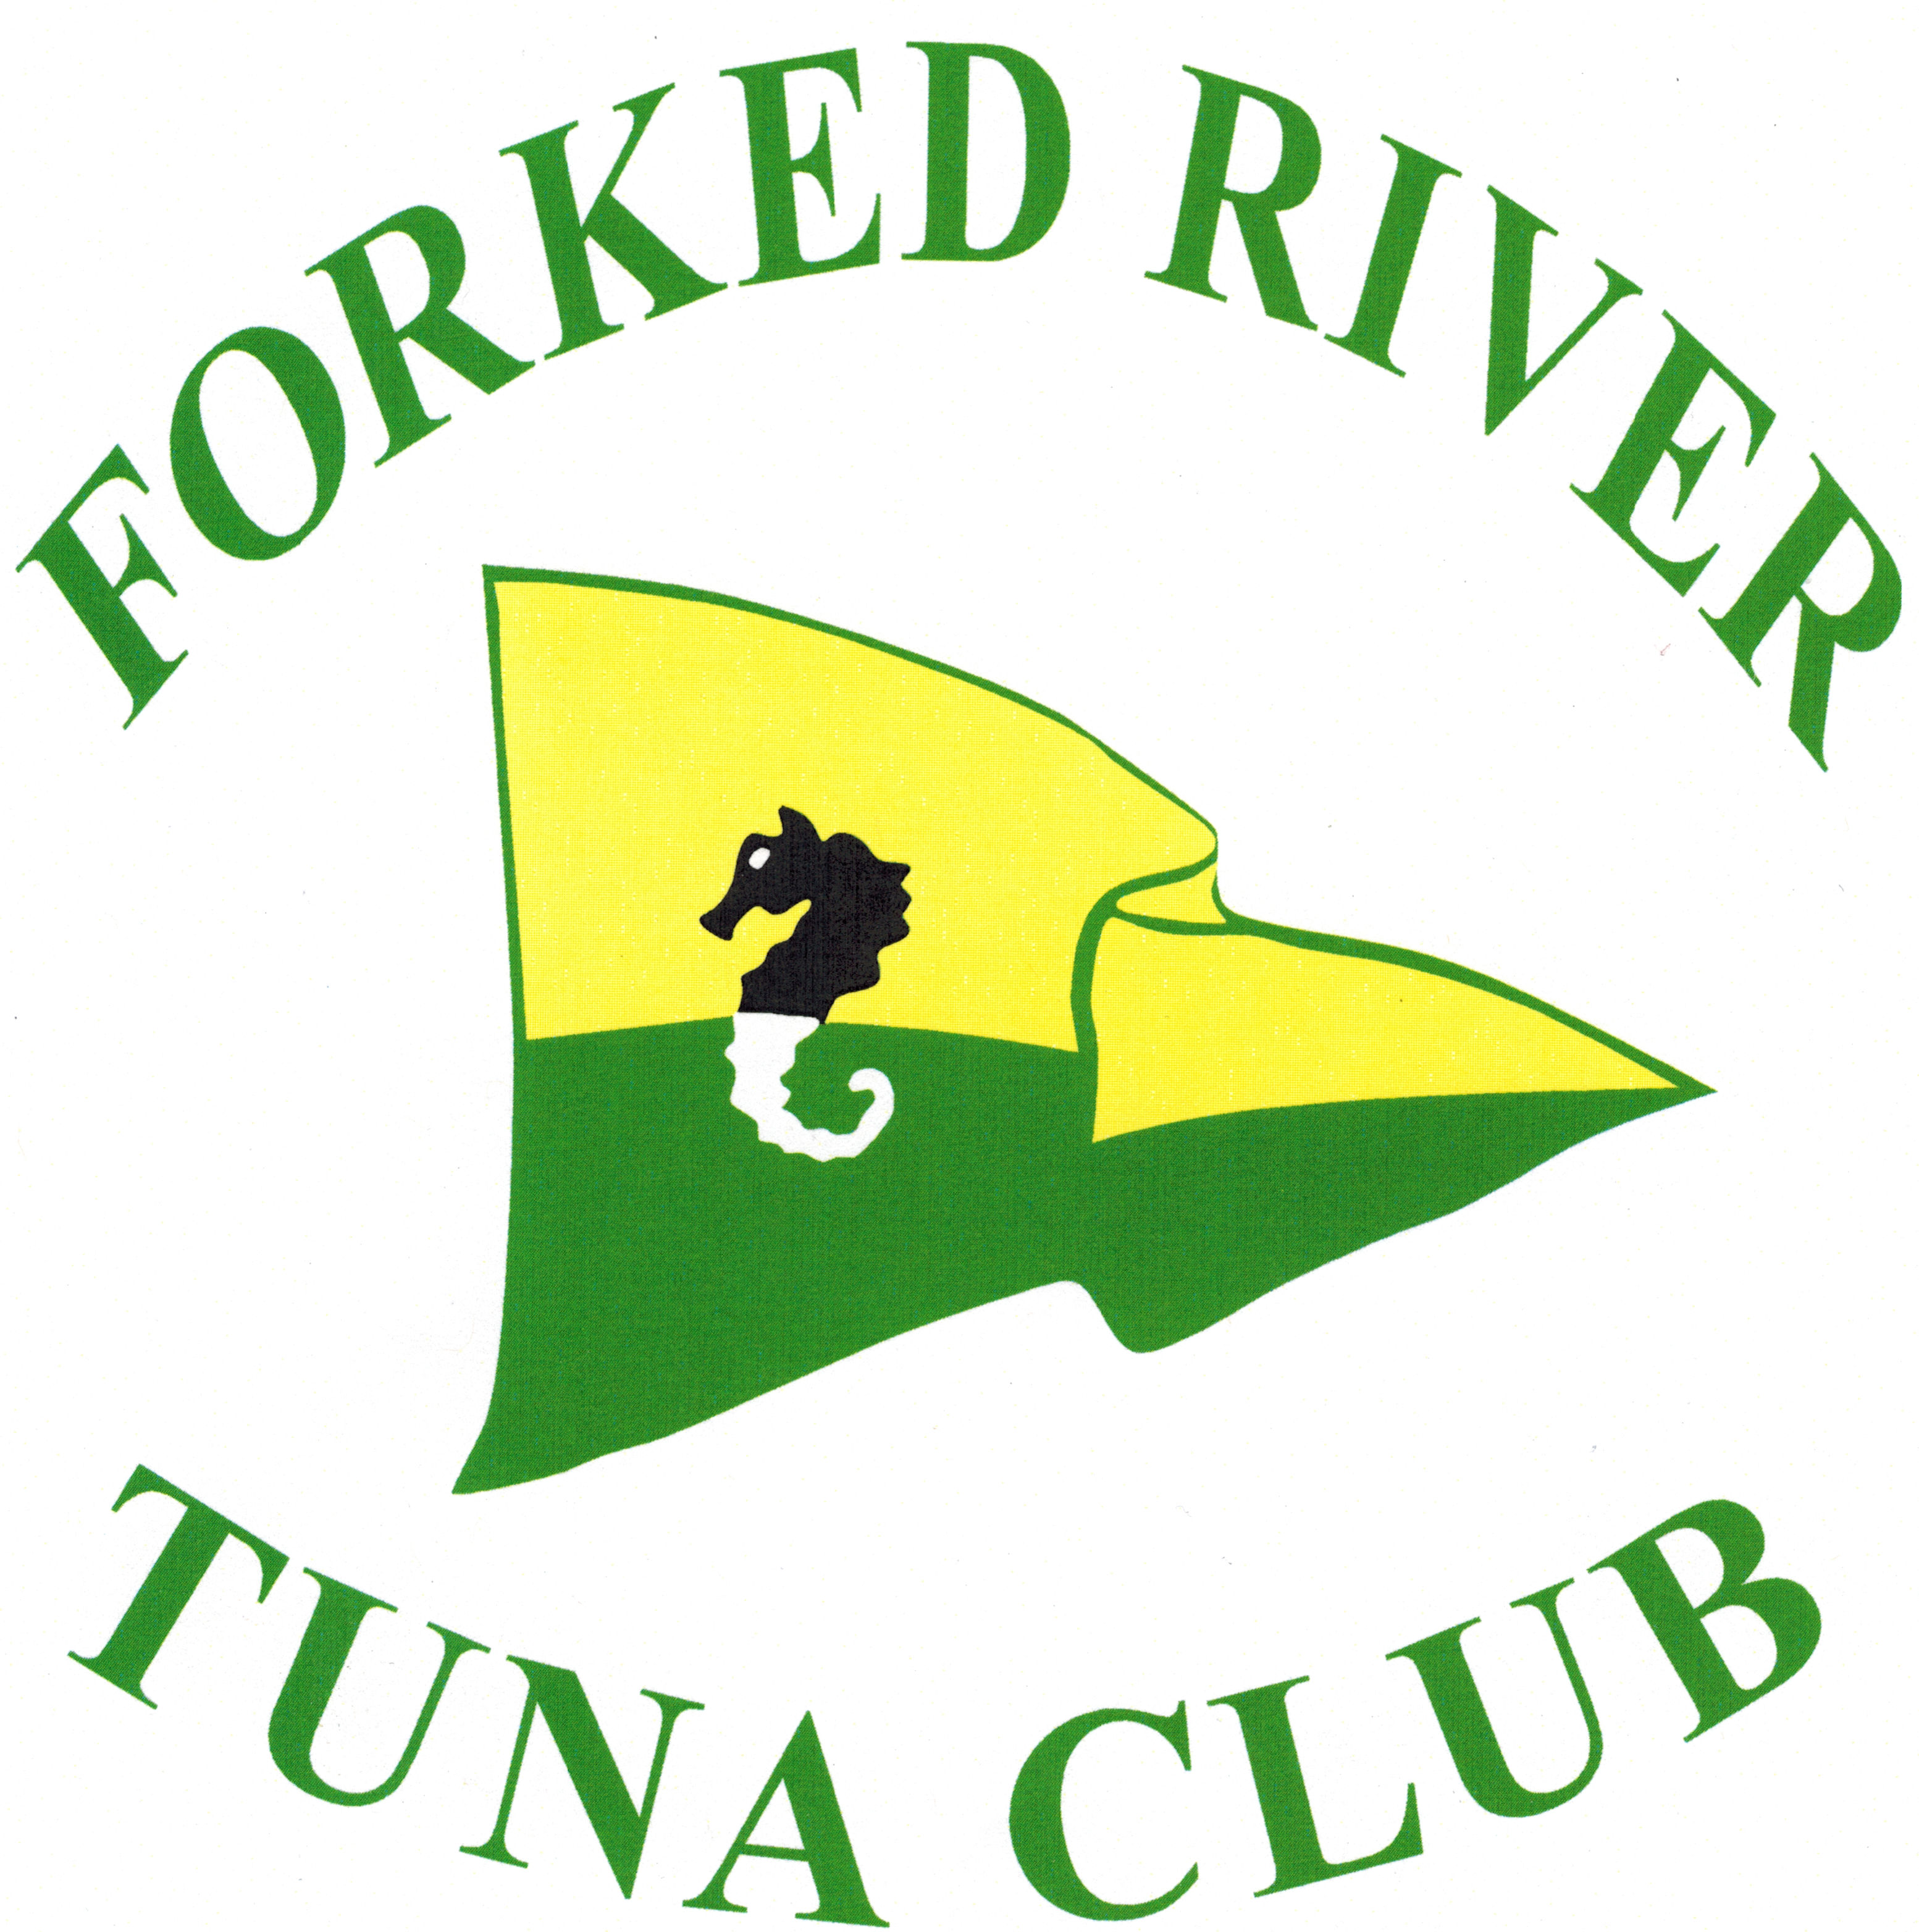 Forked River Tuna Club